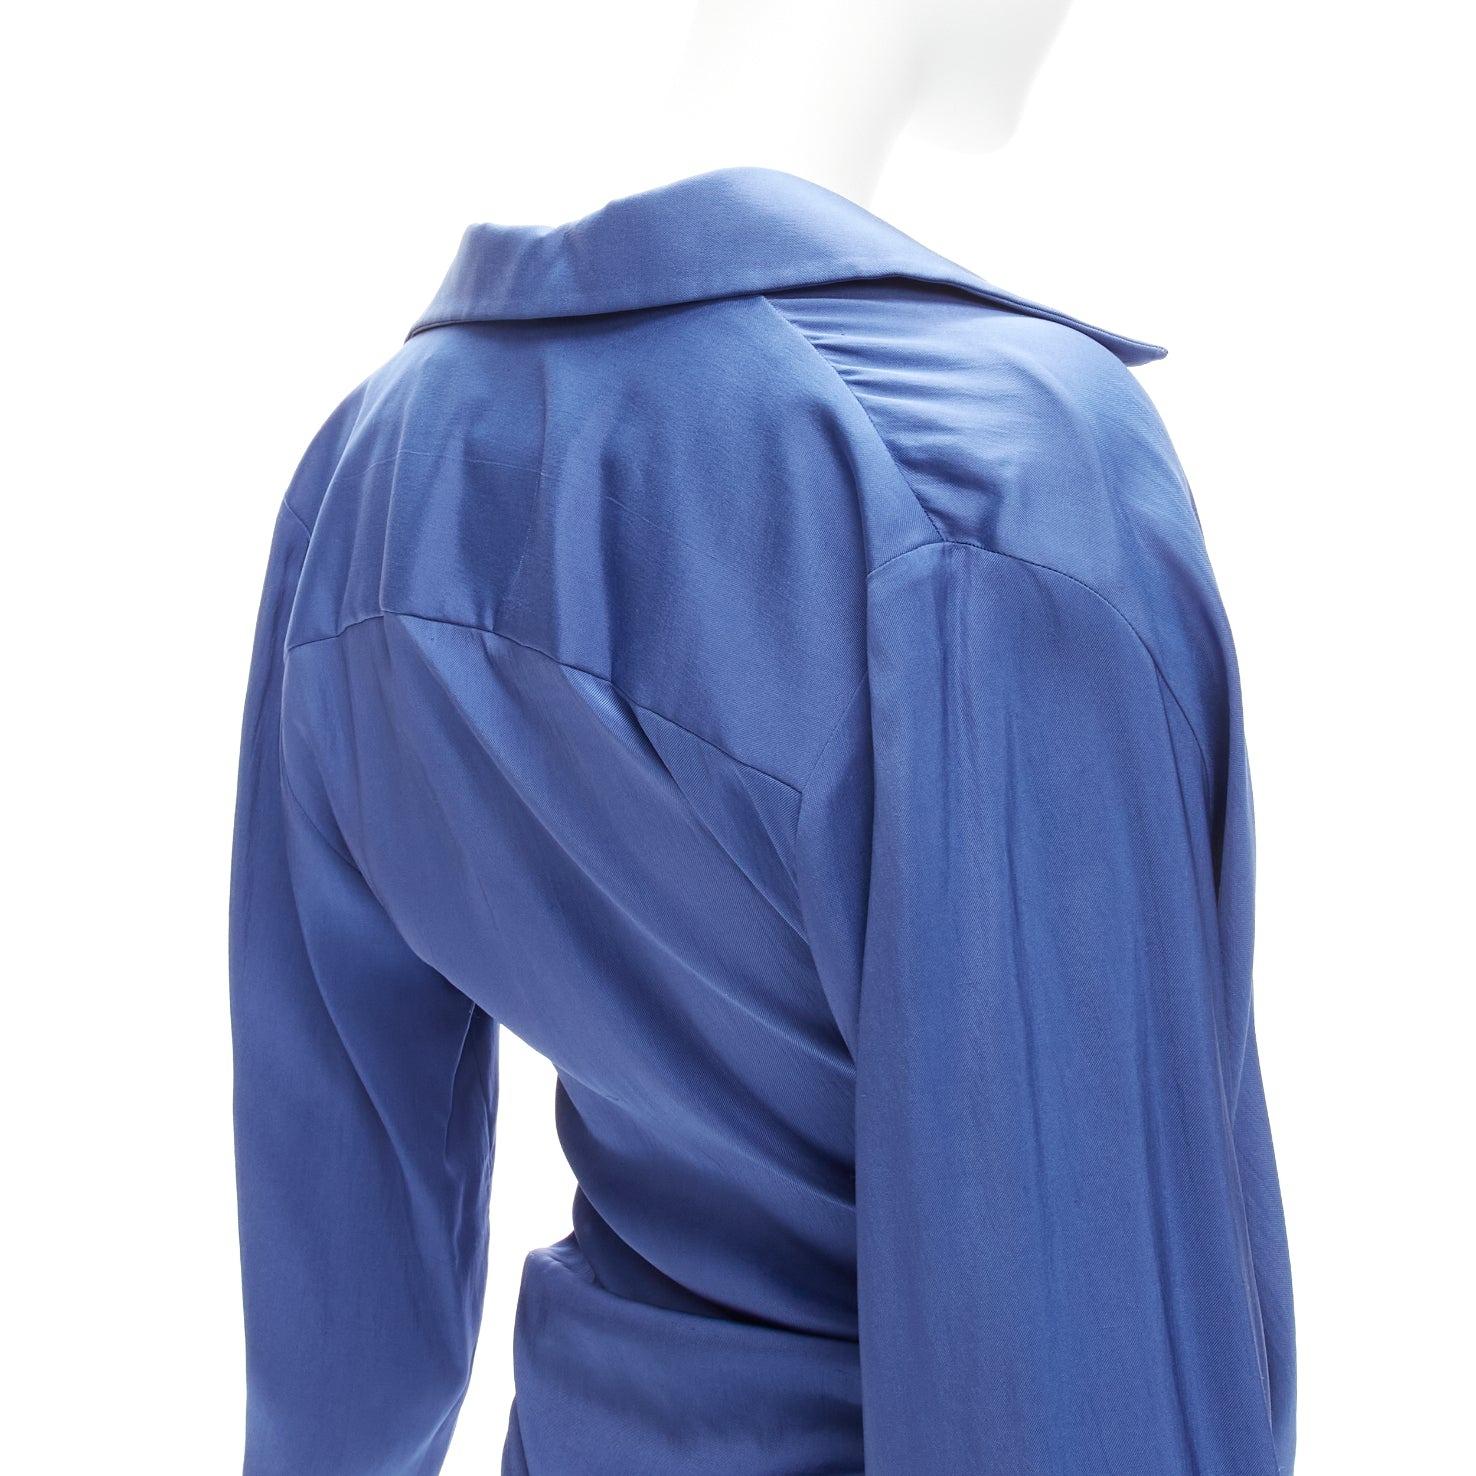 JACQUEMUS Le Collectionneuse blue plunge knot drape asymmetric blouse FR34 XS
Reference: JACG/A00122
Brand: Jacquemus
Model: Le Collectionneuse
Material: Viscose, Blend
Color: Blue
Pattern: Solid
Closure: Button
Extra Details: Knotted and button